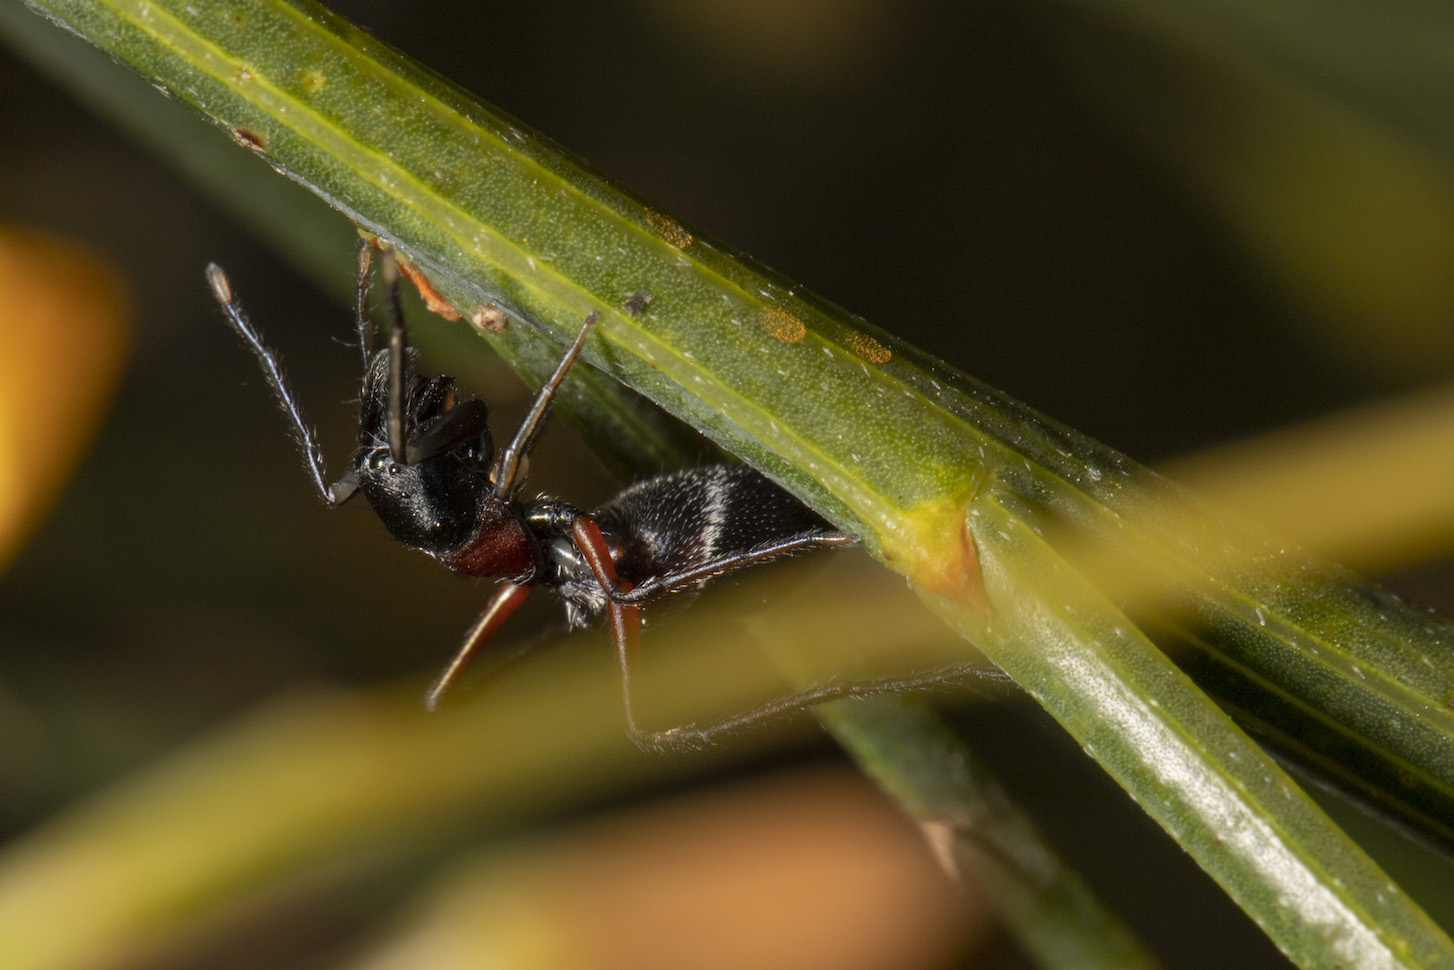 Mimic Jumping Spider (Myrmarachne sp.) found in Jirdarup Bushland. Photo: Brad Durrant